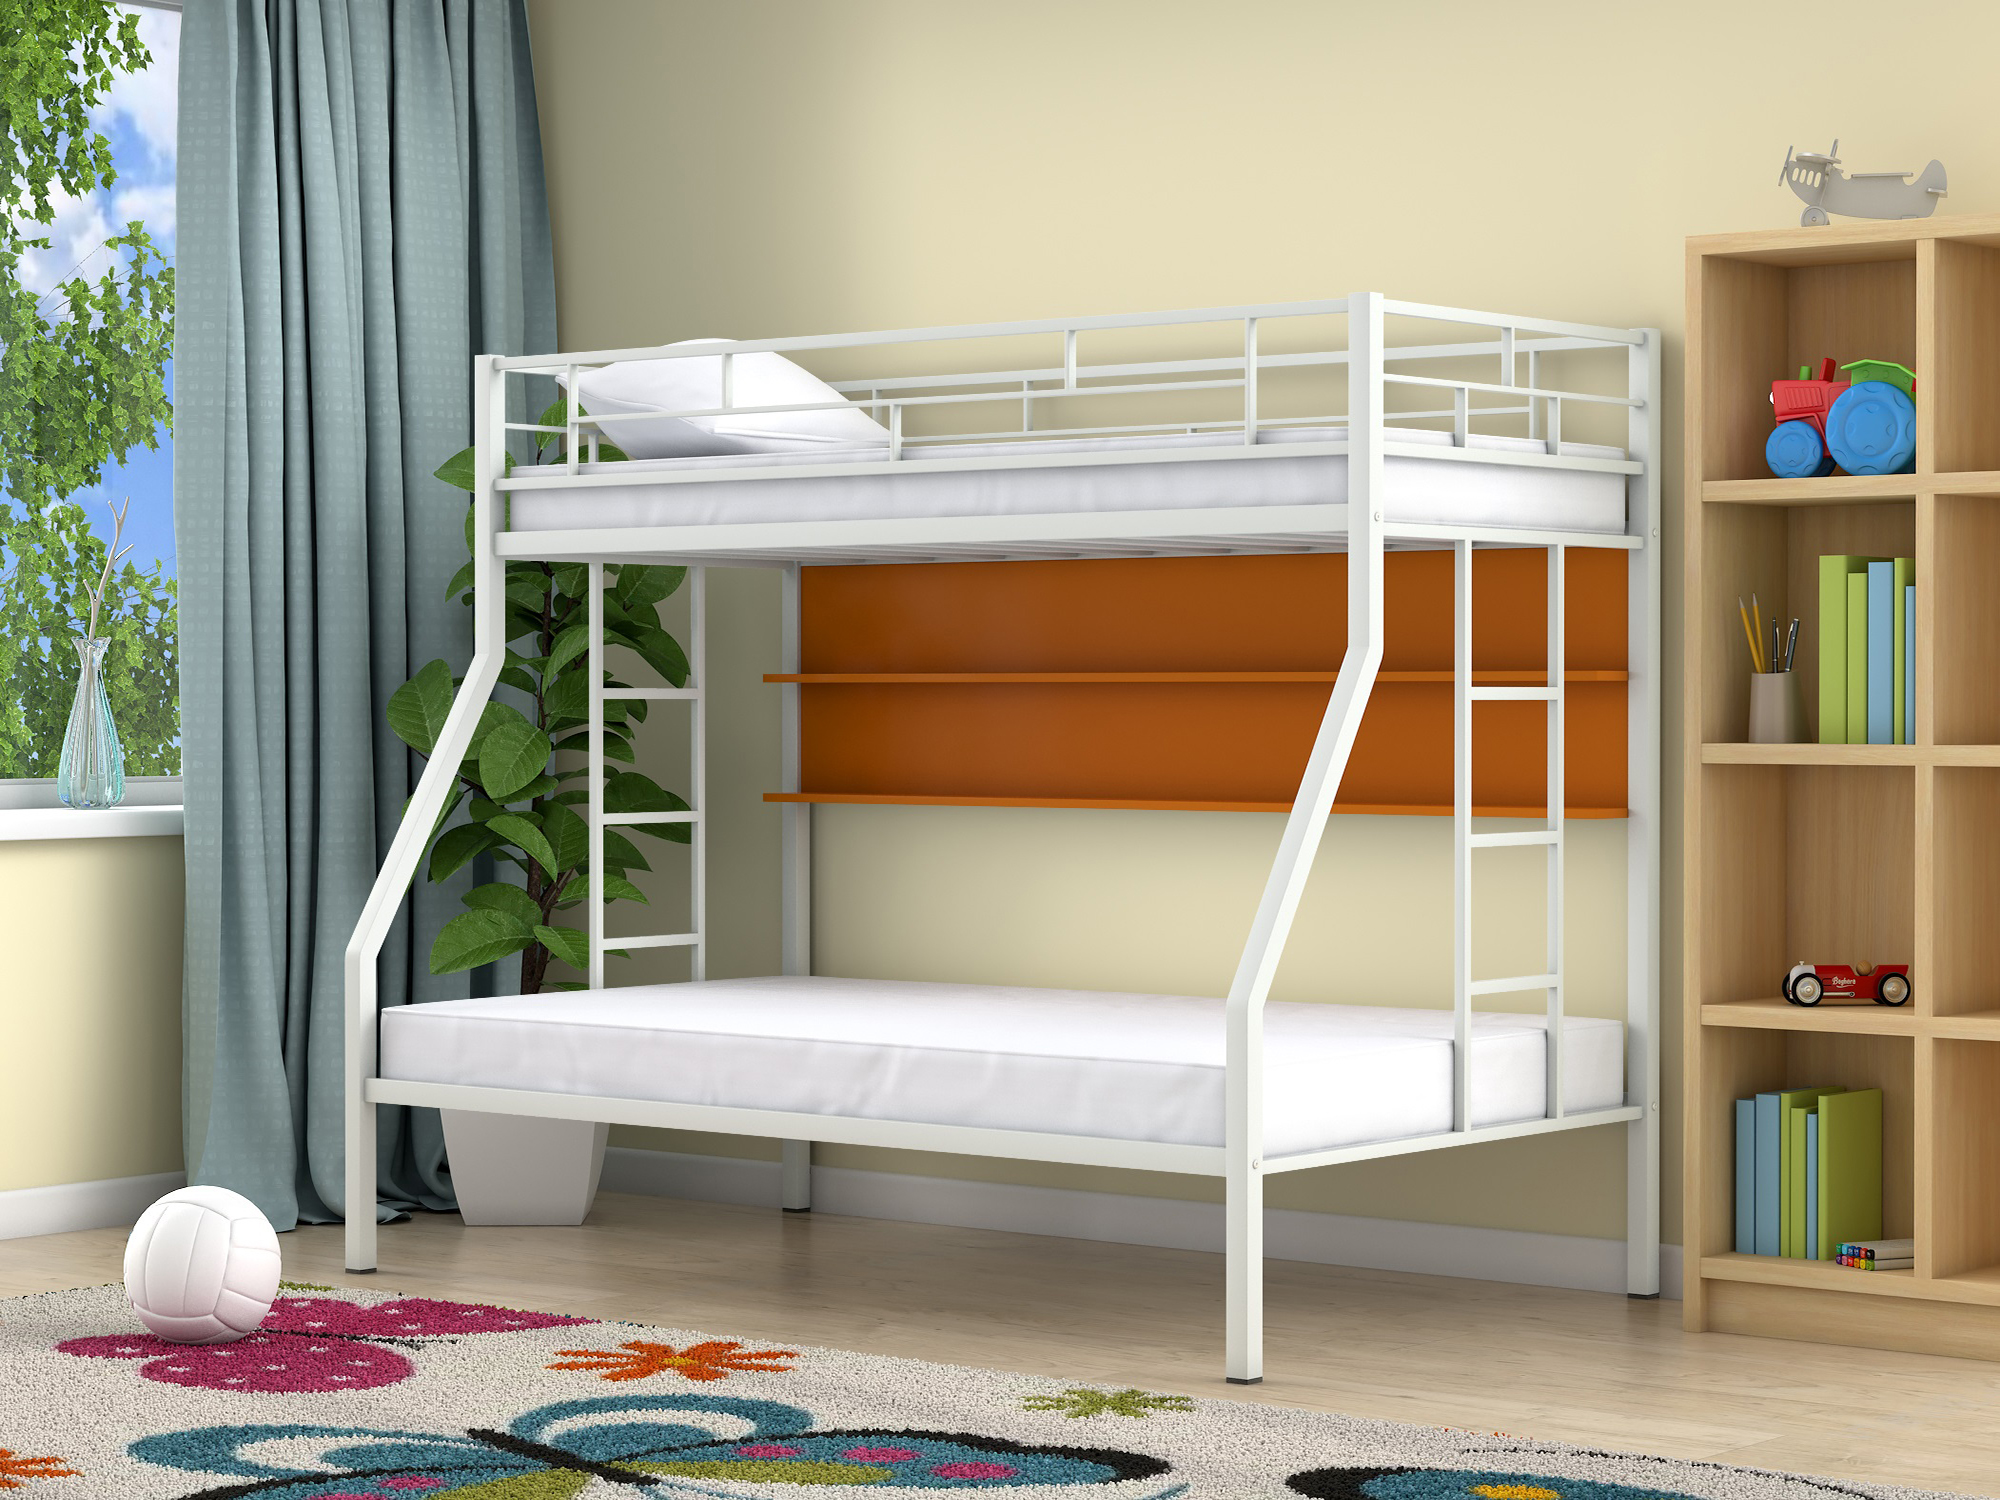 Двухъярусная кровать Милан (90х190/120х190) Оранжевый, , Белый, ЛДСП, Металл двухъярусная кровать милан 90х190 120х190 черный металл